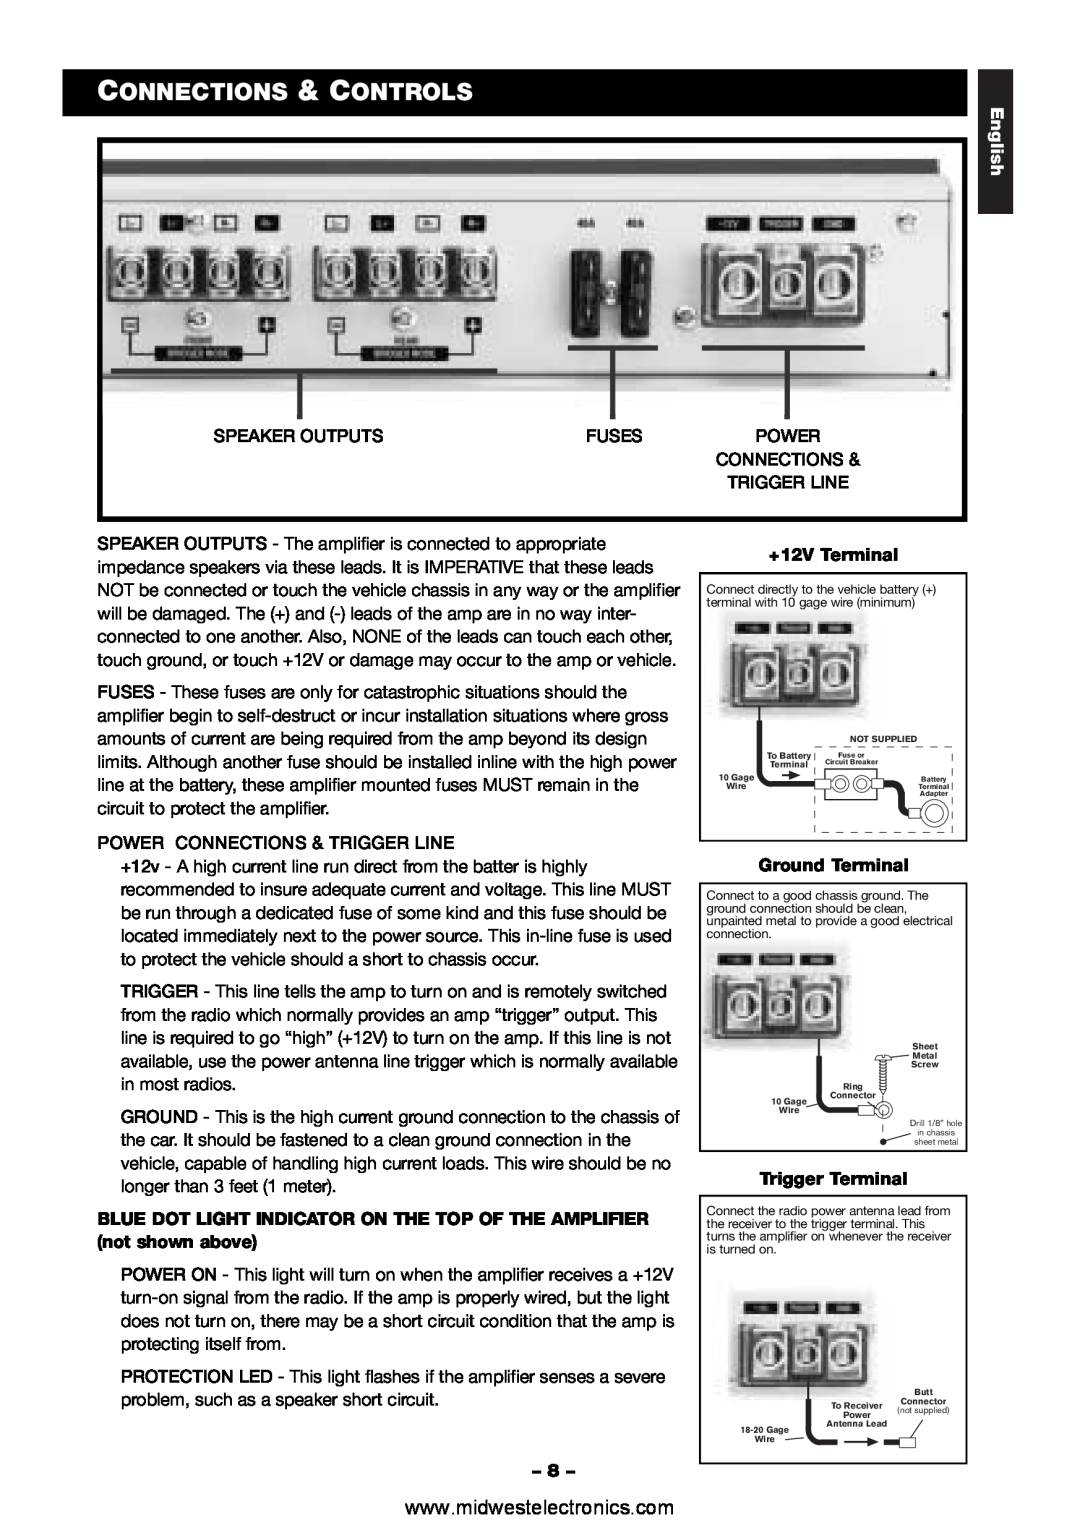 Blaupunkt VA4100 manual Connections & Controls, English, +12V Terminal, Ground Terminal, Trigger Terminal 